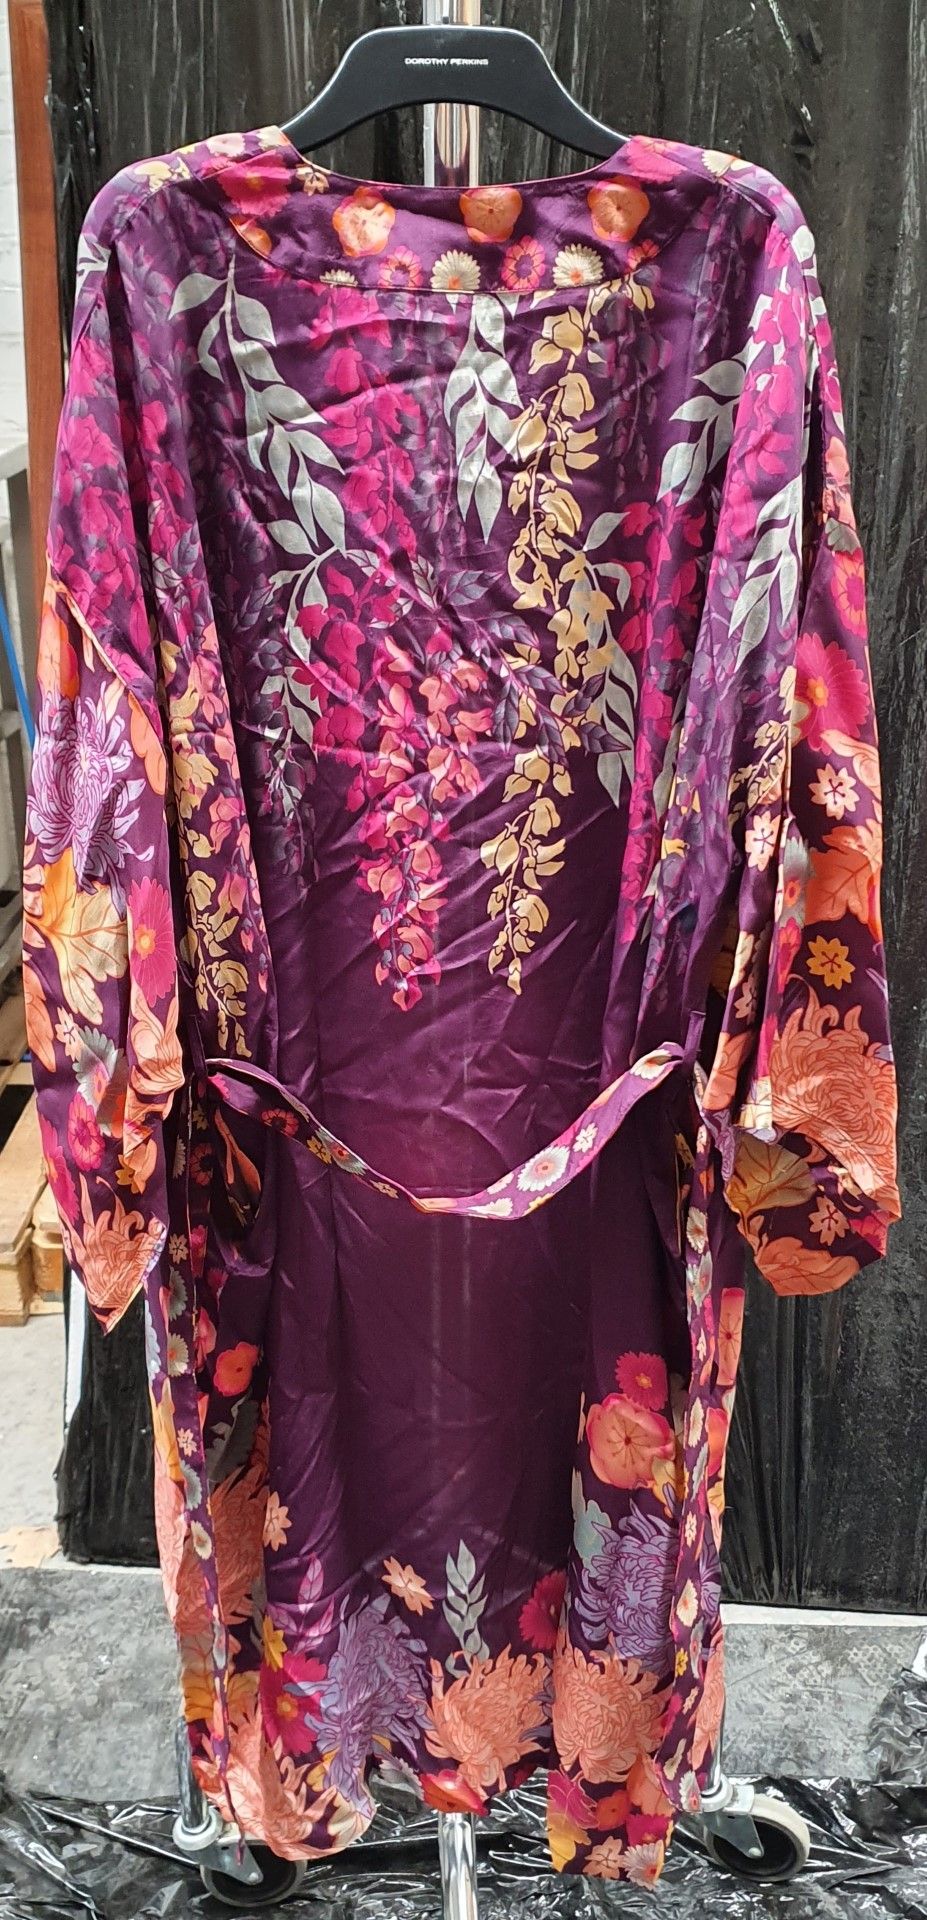 6 x Powder Kimono Style Gowns and 1 x Scarf - Folk Art Petal Finish 100% Viscose Fabric - Adult - Image 18 of 22